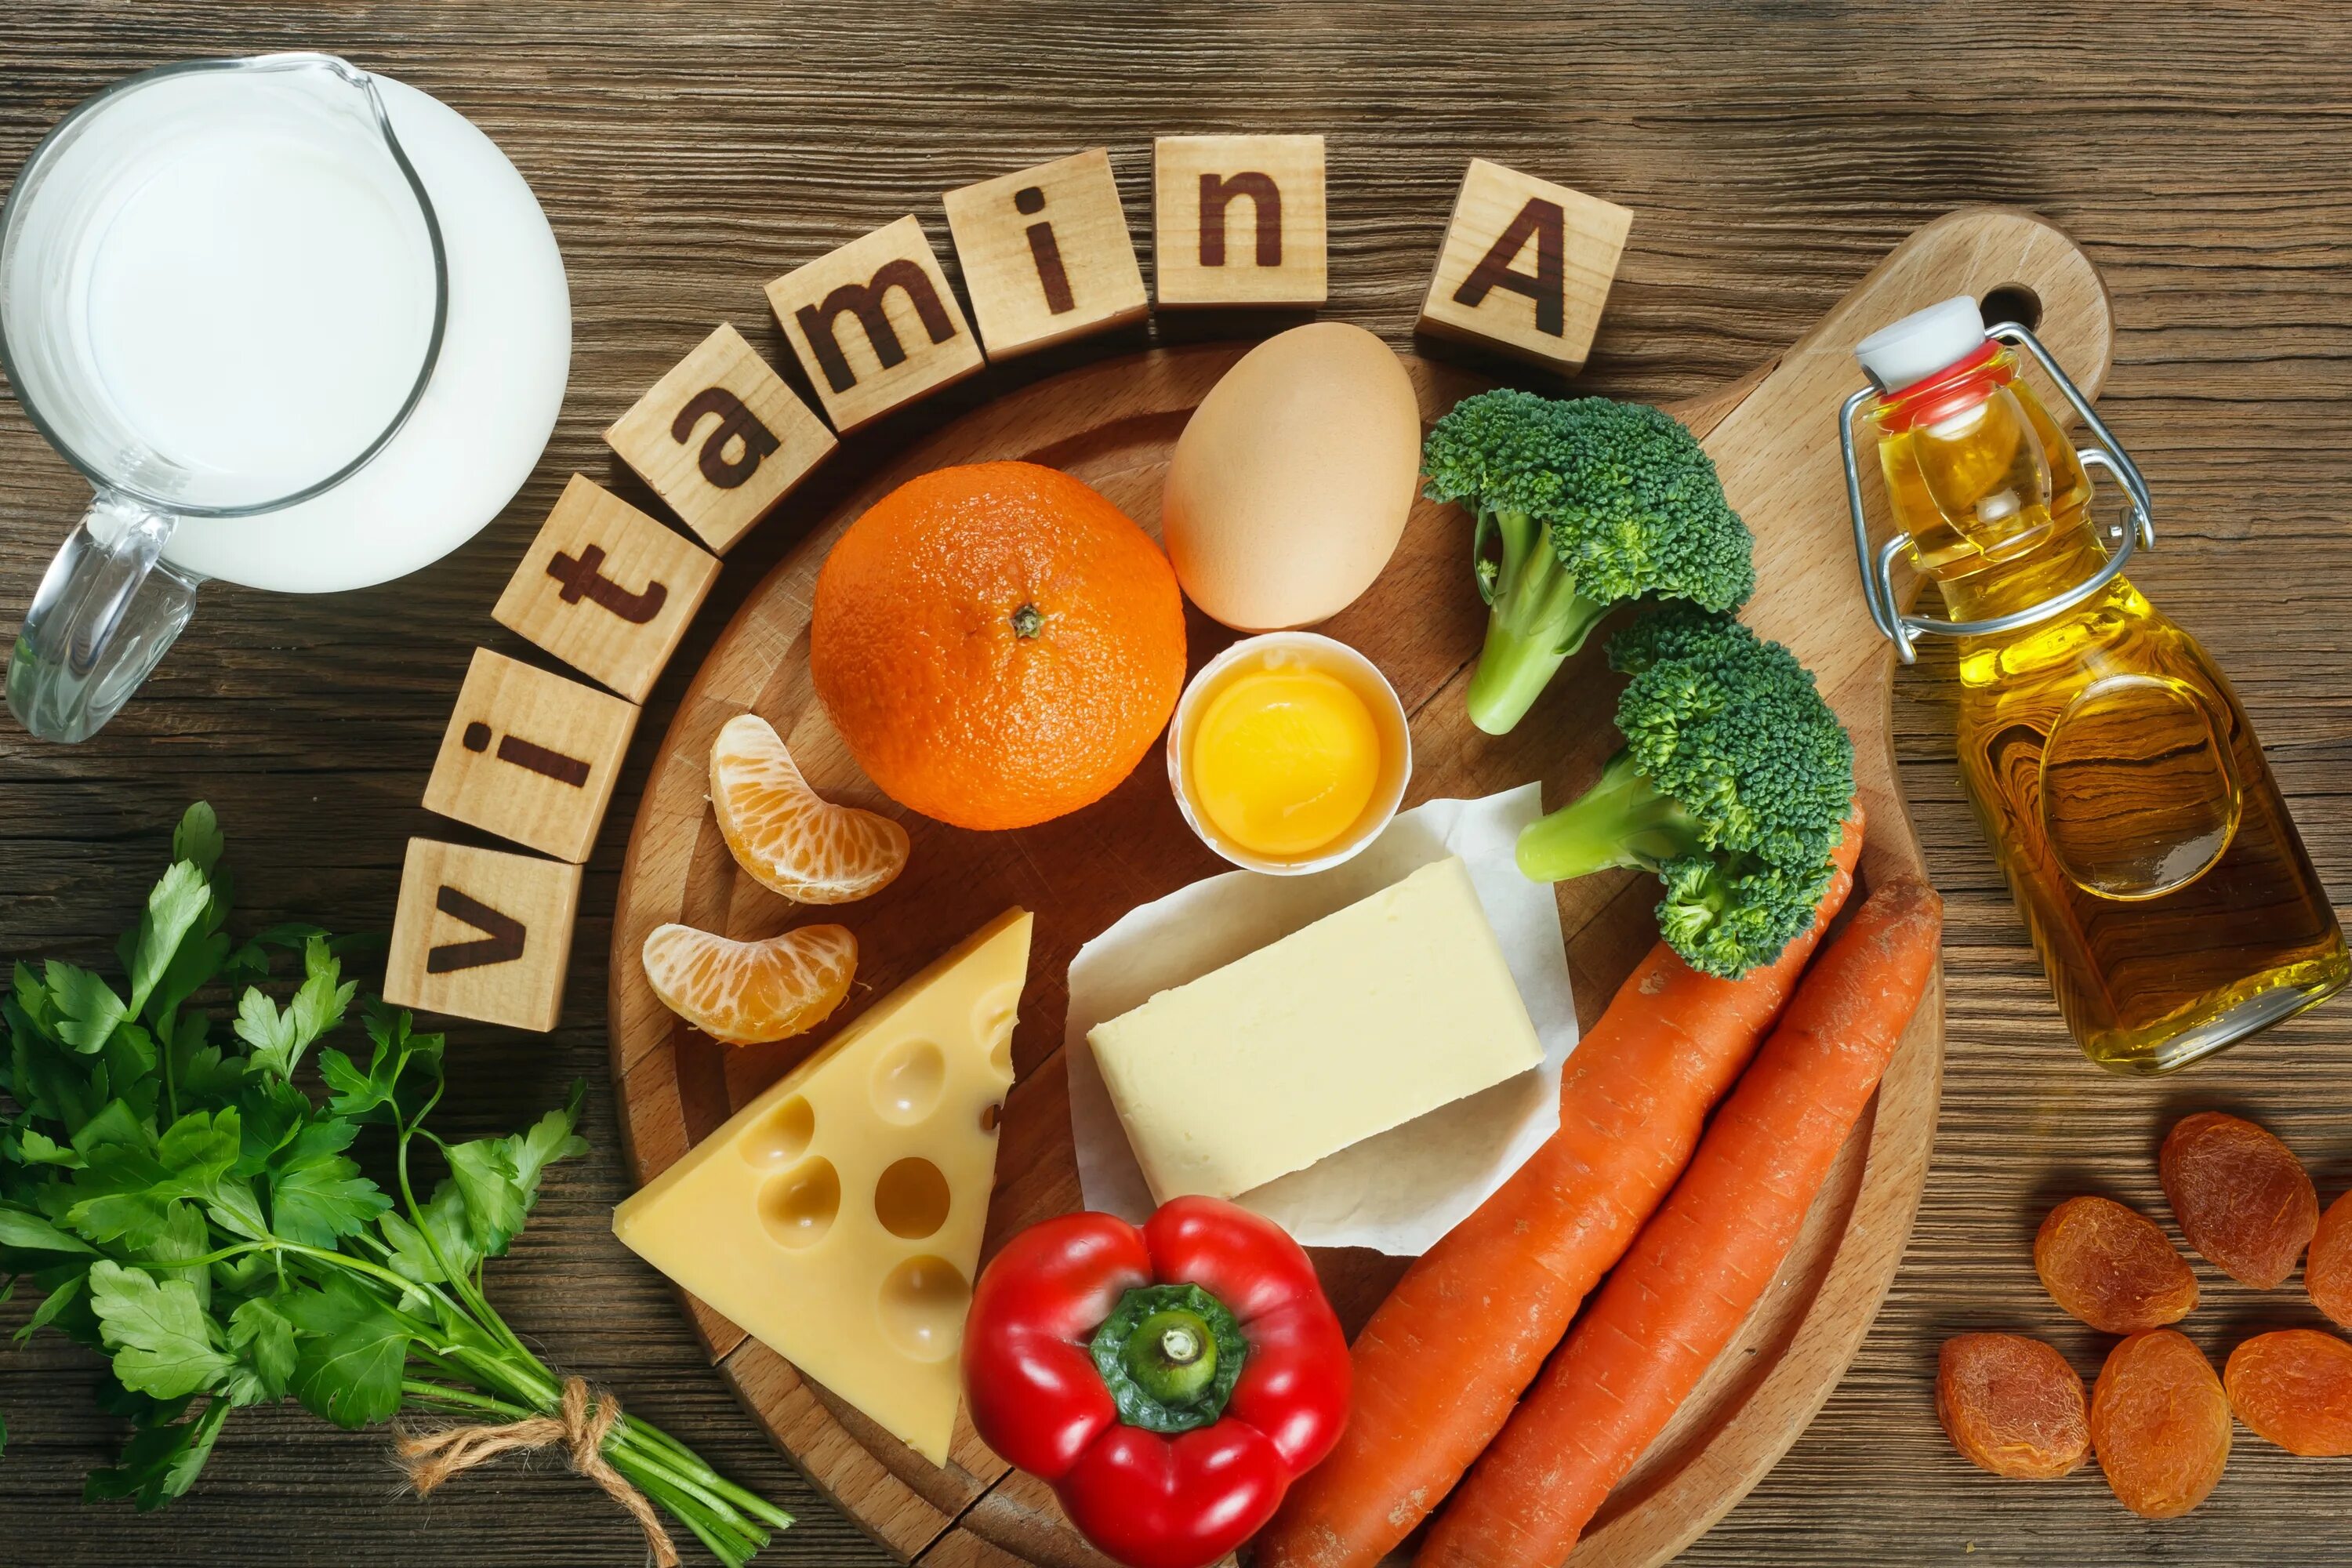 Much vitamins. Что такое витамины. Витамины в продуктах. Витамины в еде. Полезные продукты.